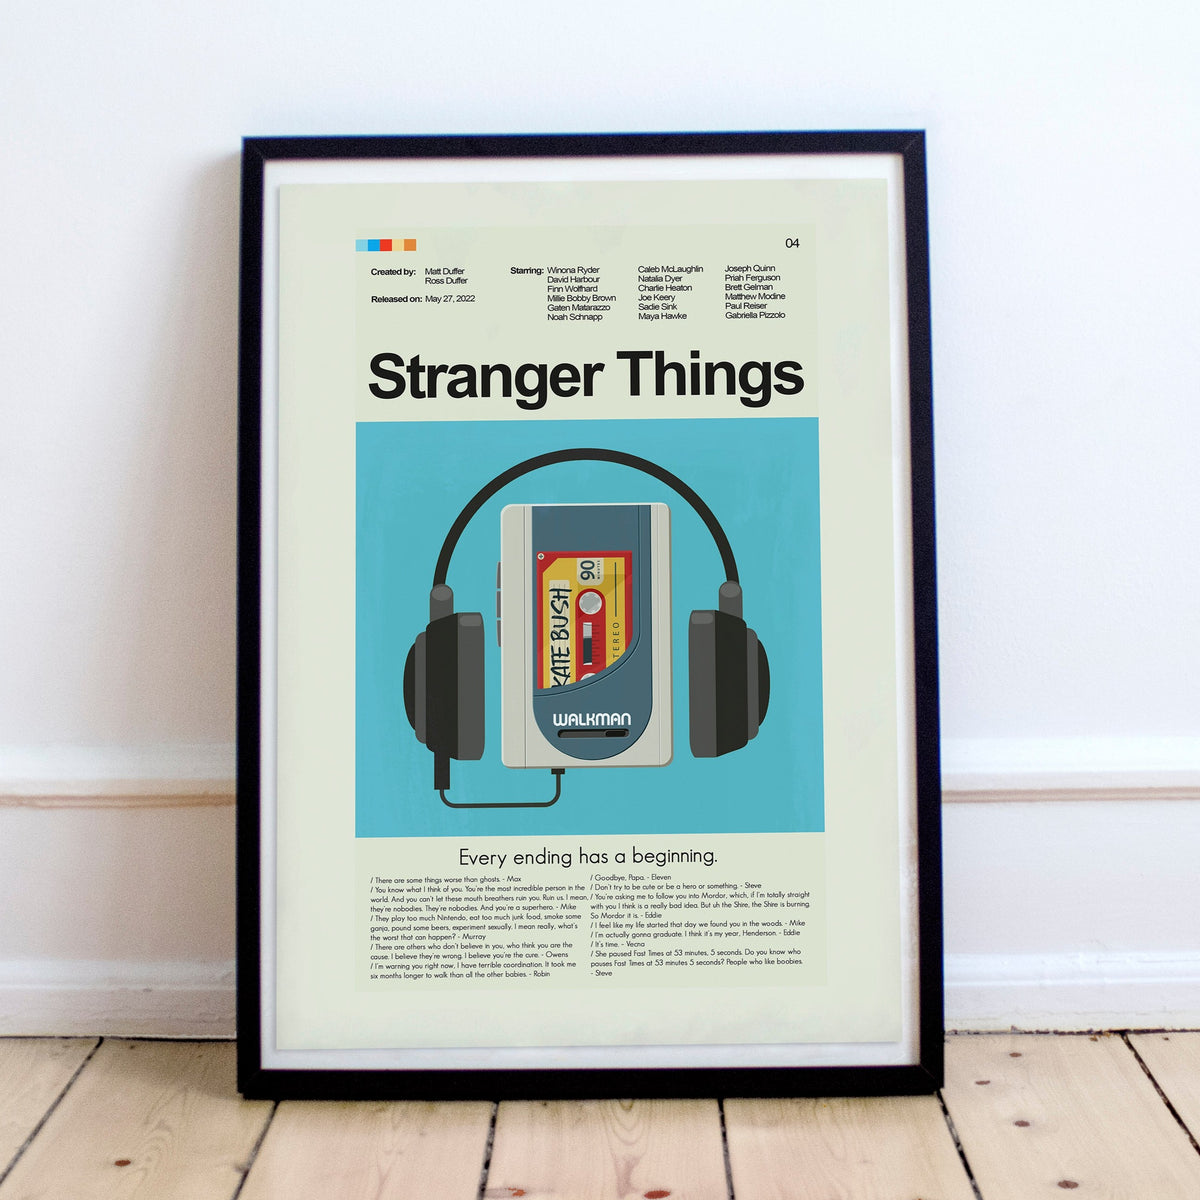 Stranger Things (Season 4) - Max's Walkman | 12"x18" Print Only